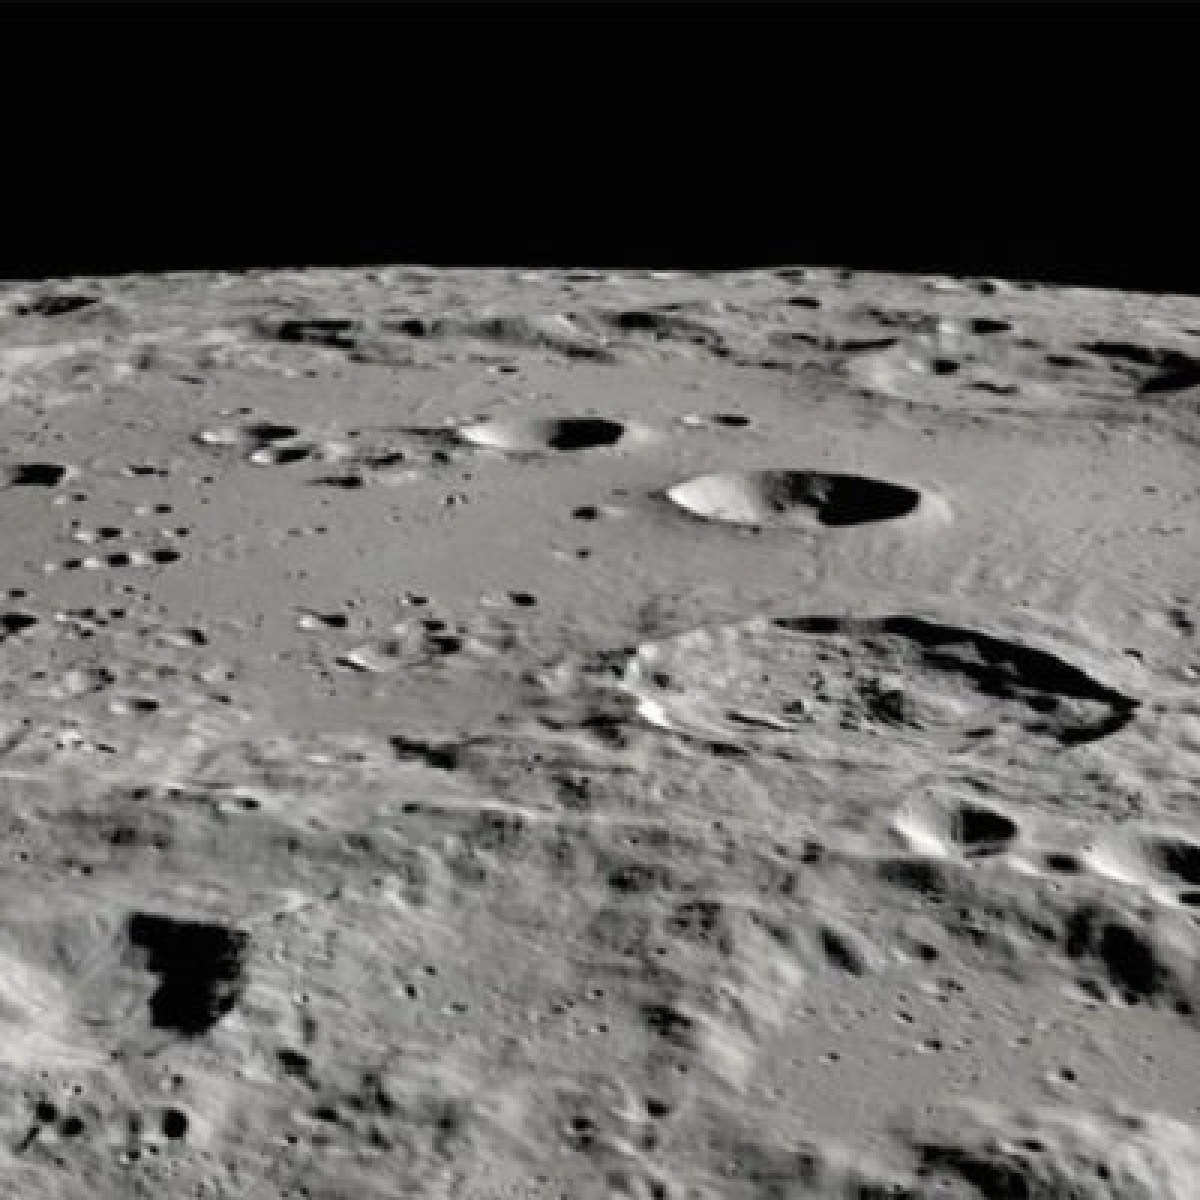 Clavius Crater. Créditos: NASA/USGS.

